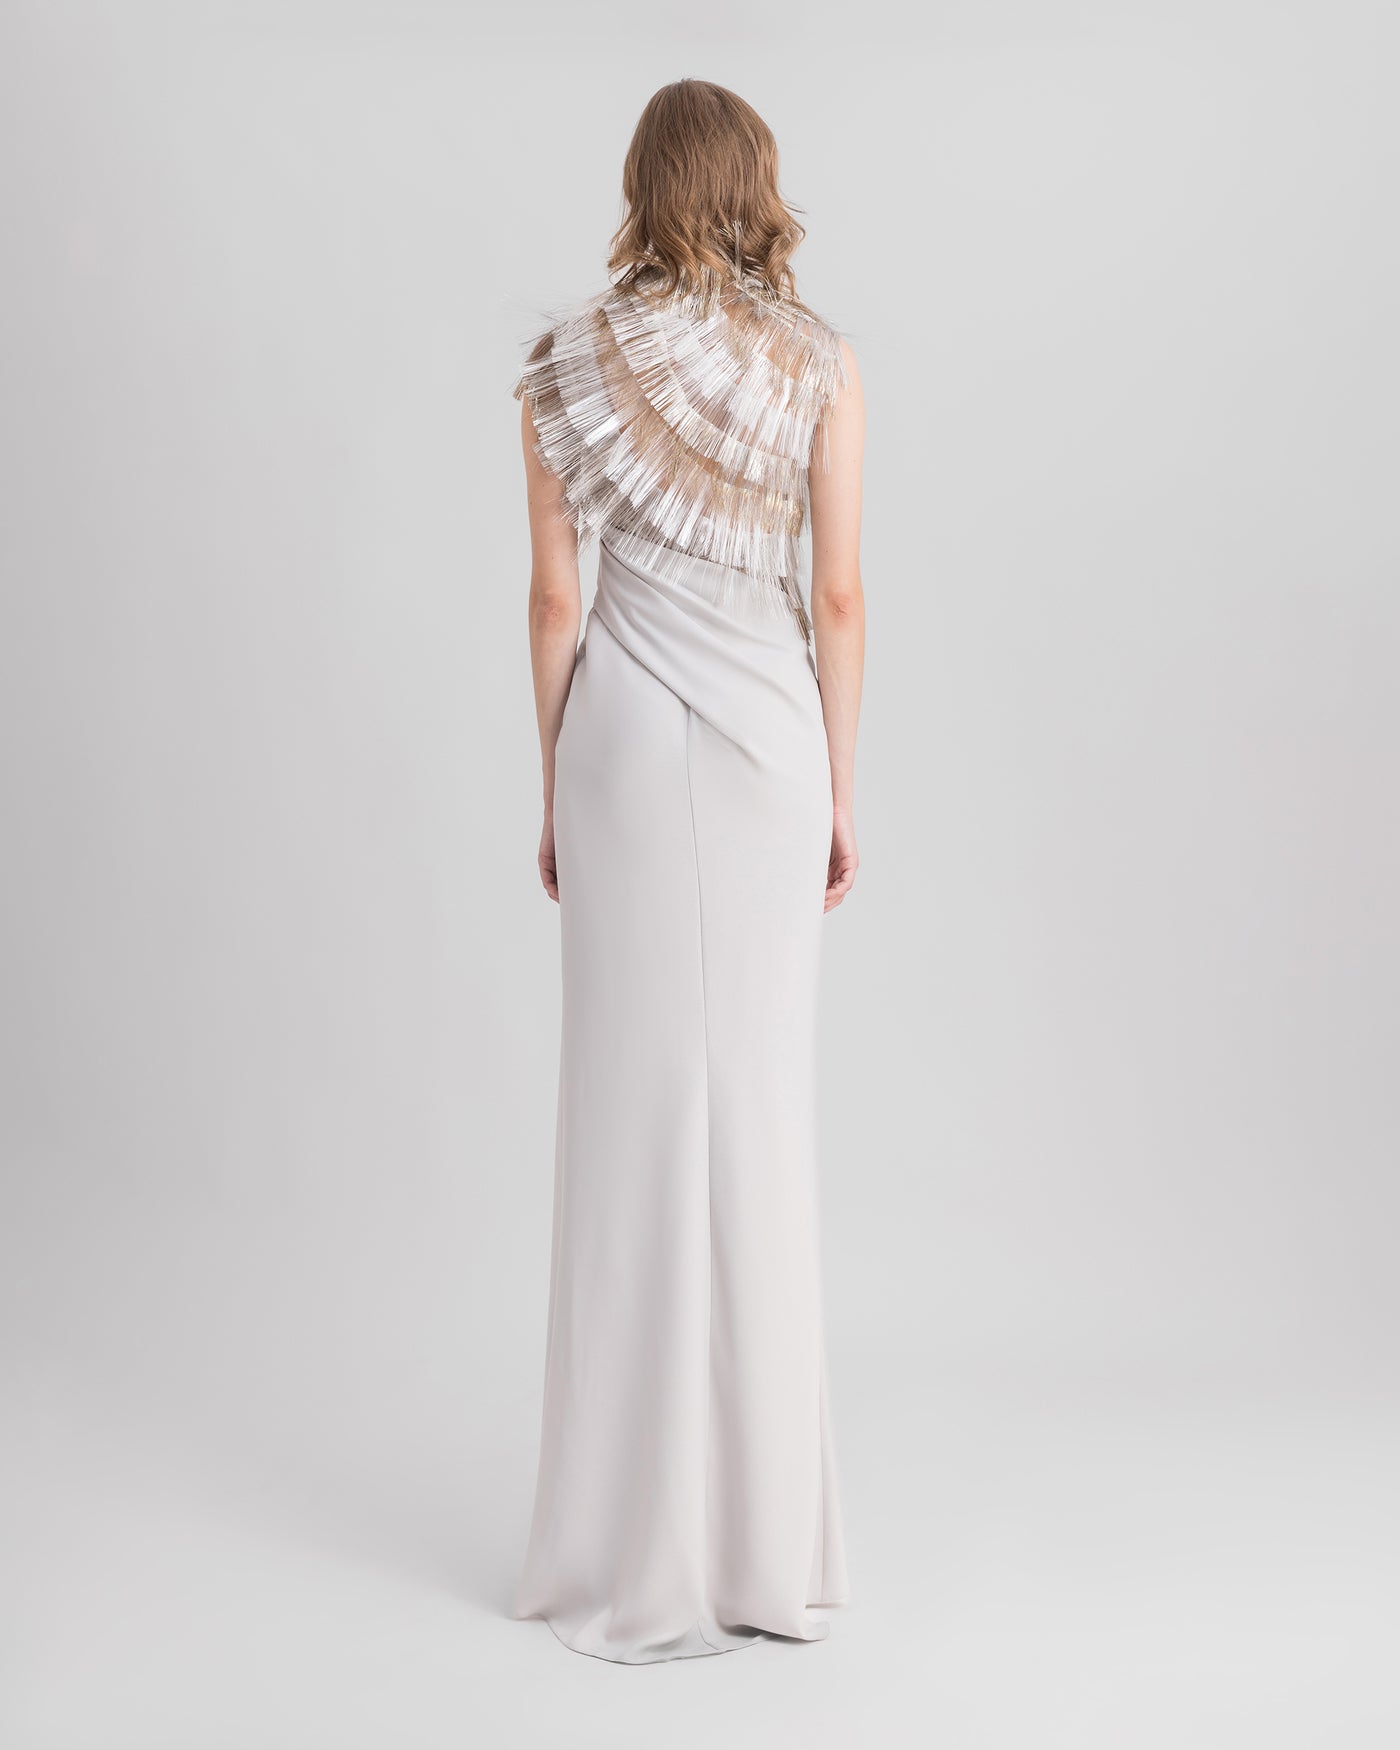 Asymmetrical Neckline Dress With Fringes